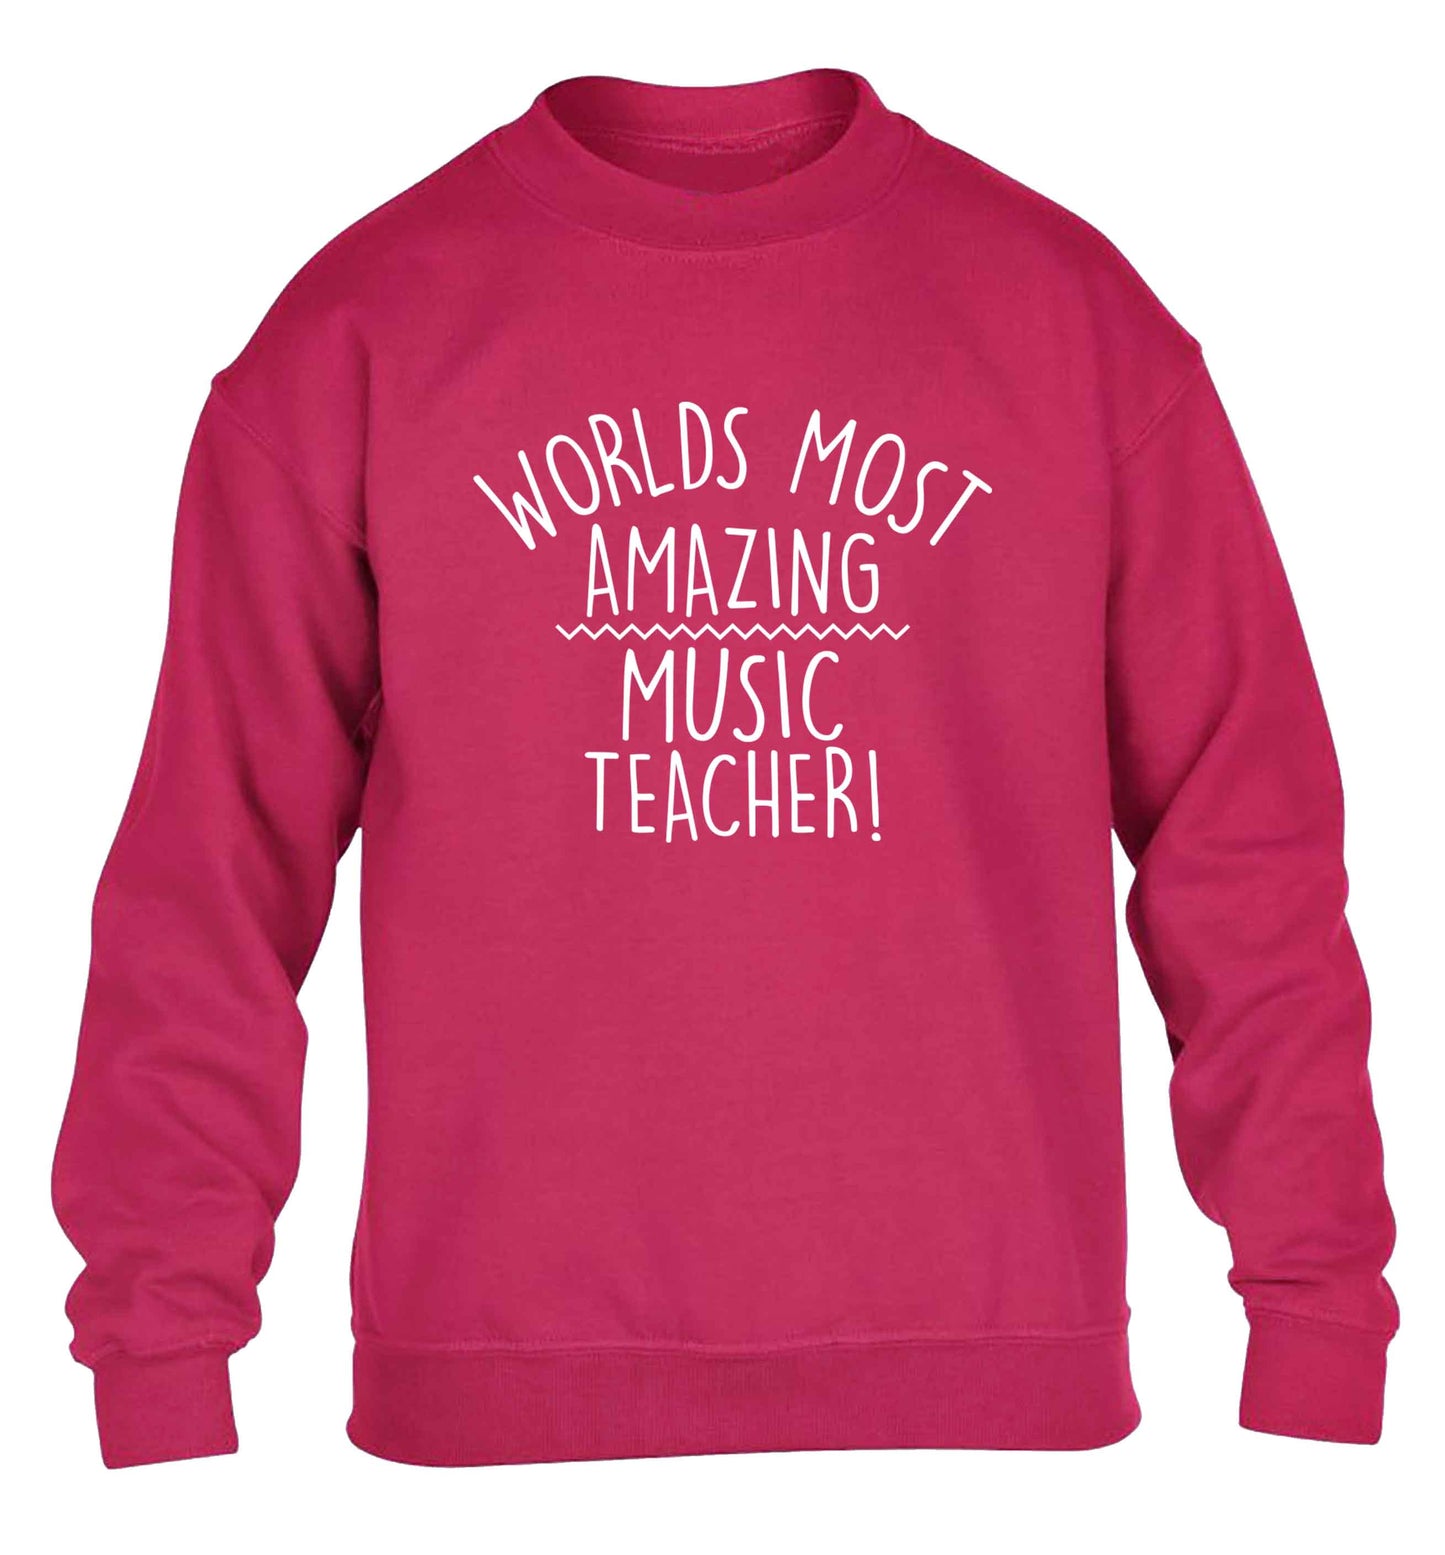 Worlds most amazing music teacher children's pink sweater 12-13 Years